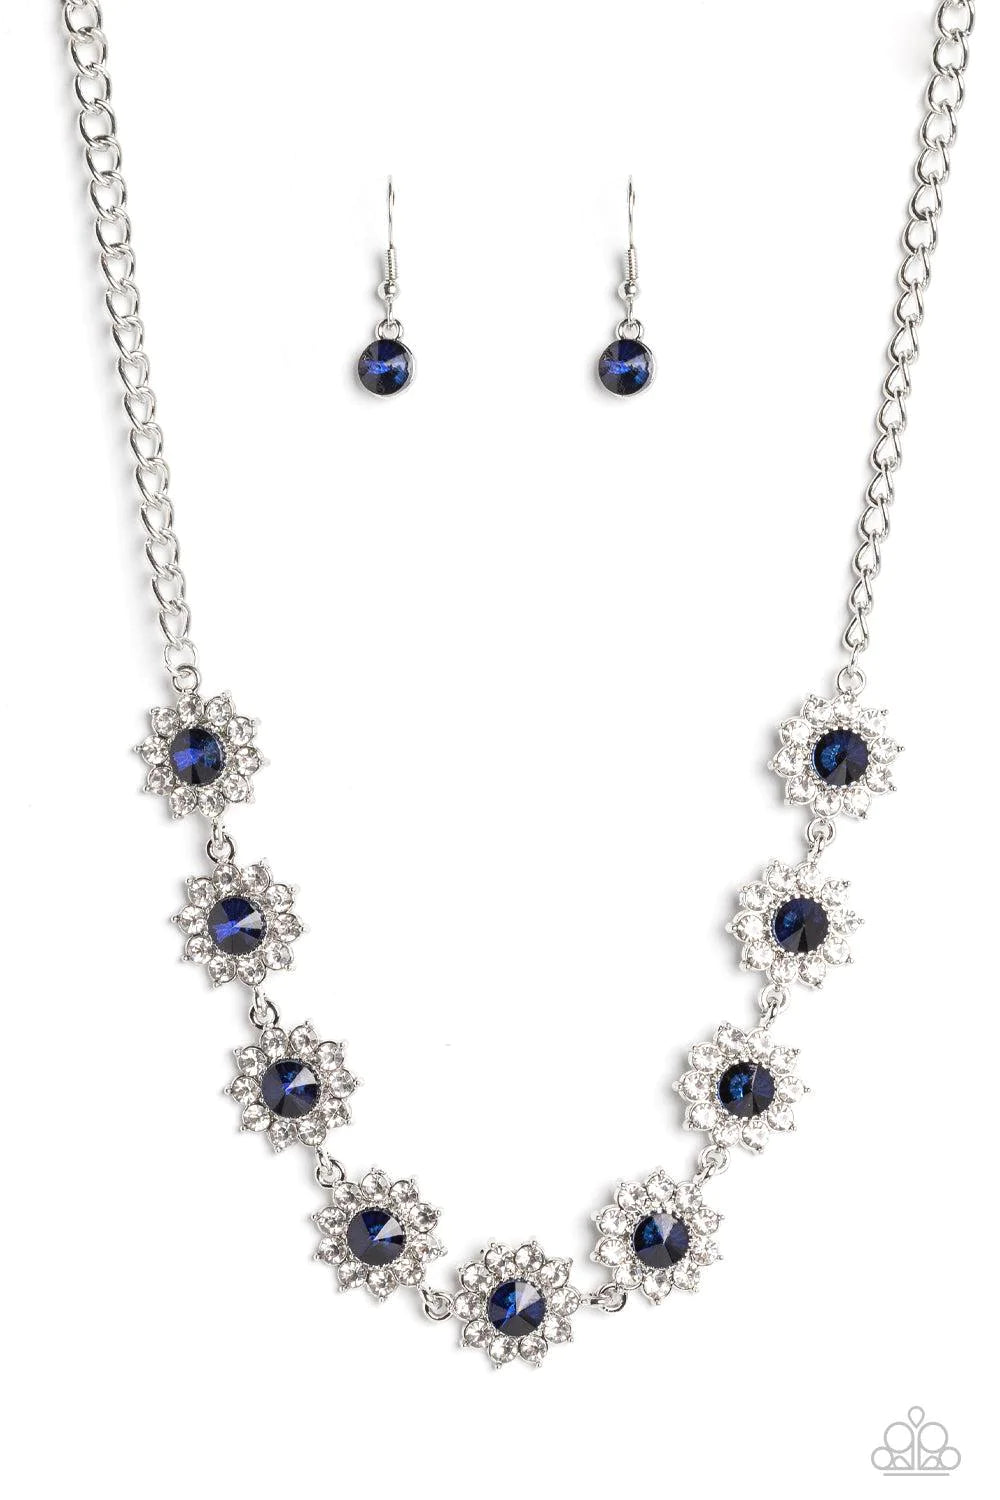 Blooming Brilliance - Blue necklace Plus matching bracelet Prismatic Palace A028